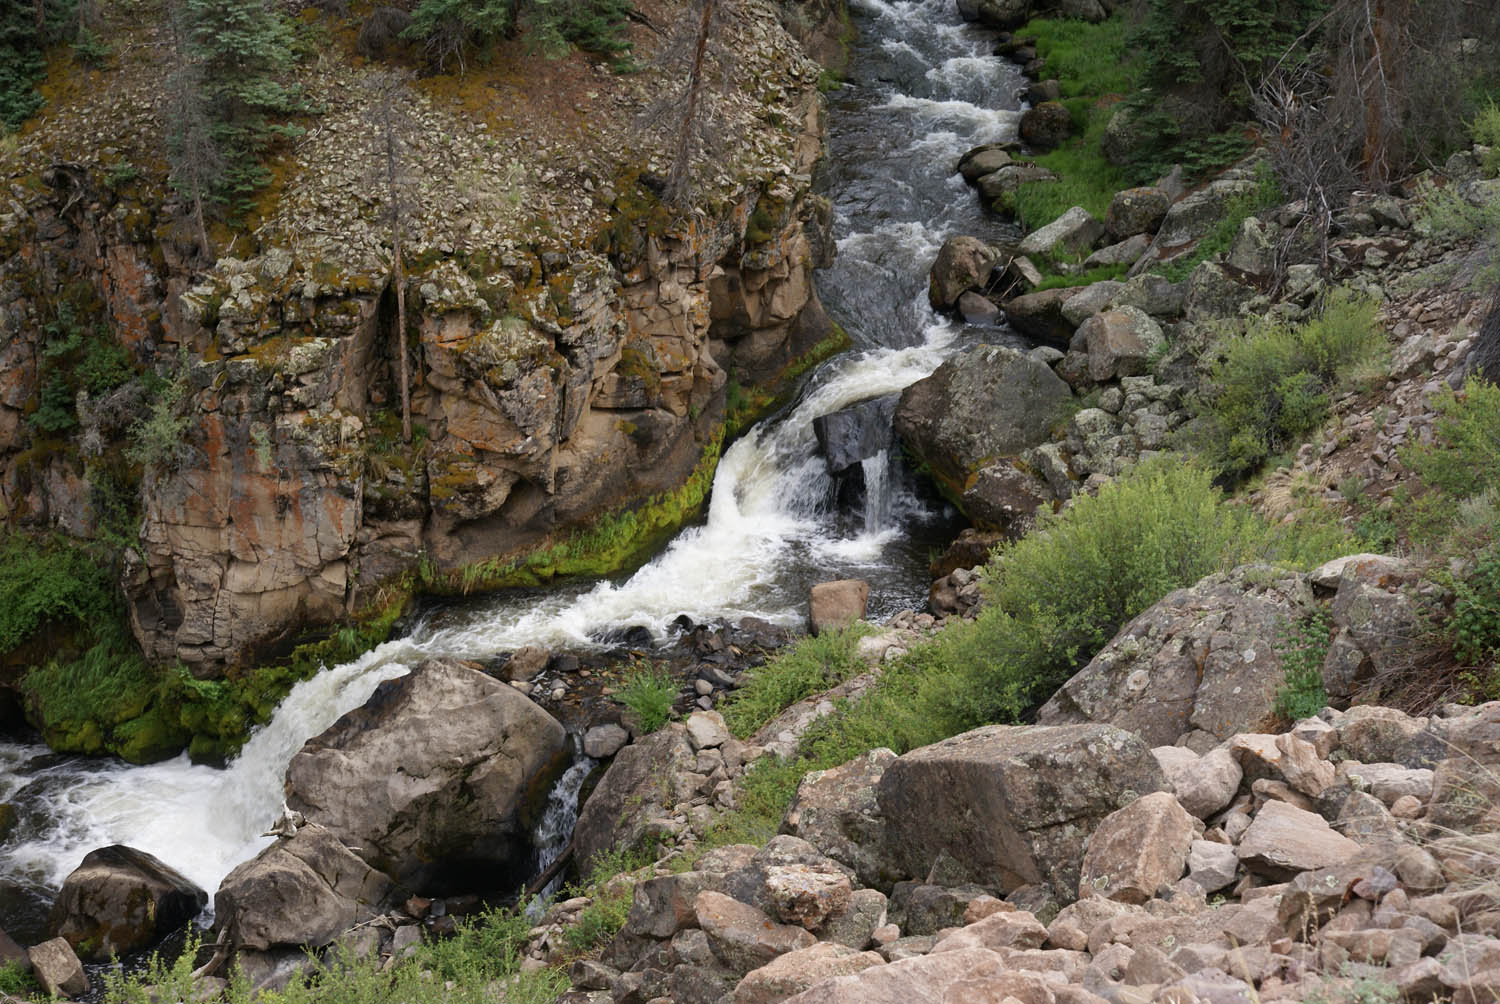 Spectacular falls in Colorado